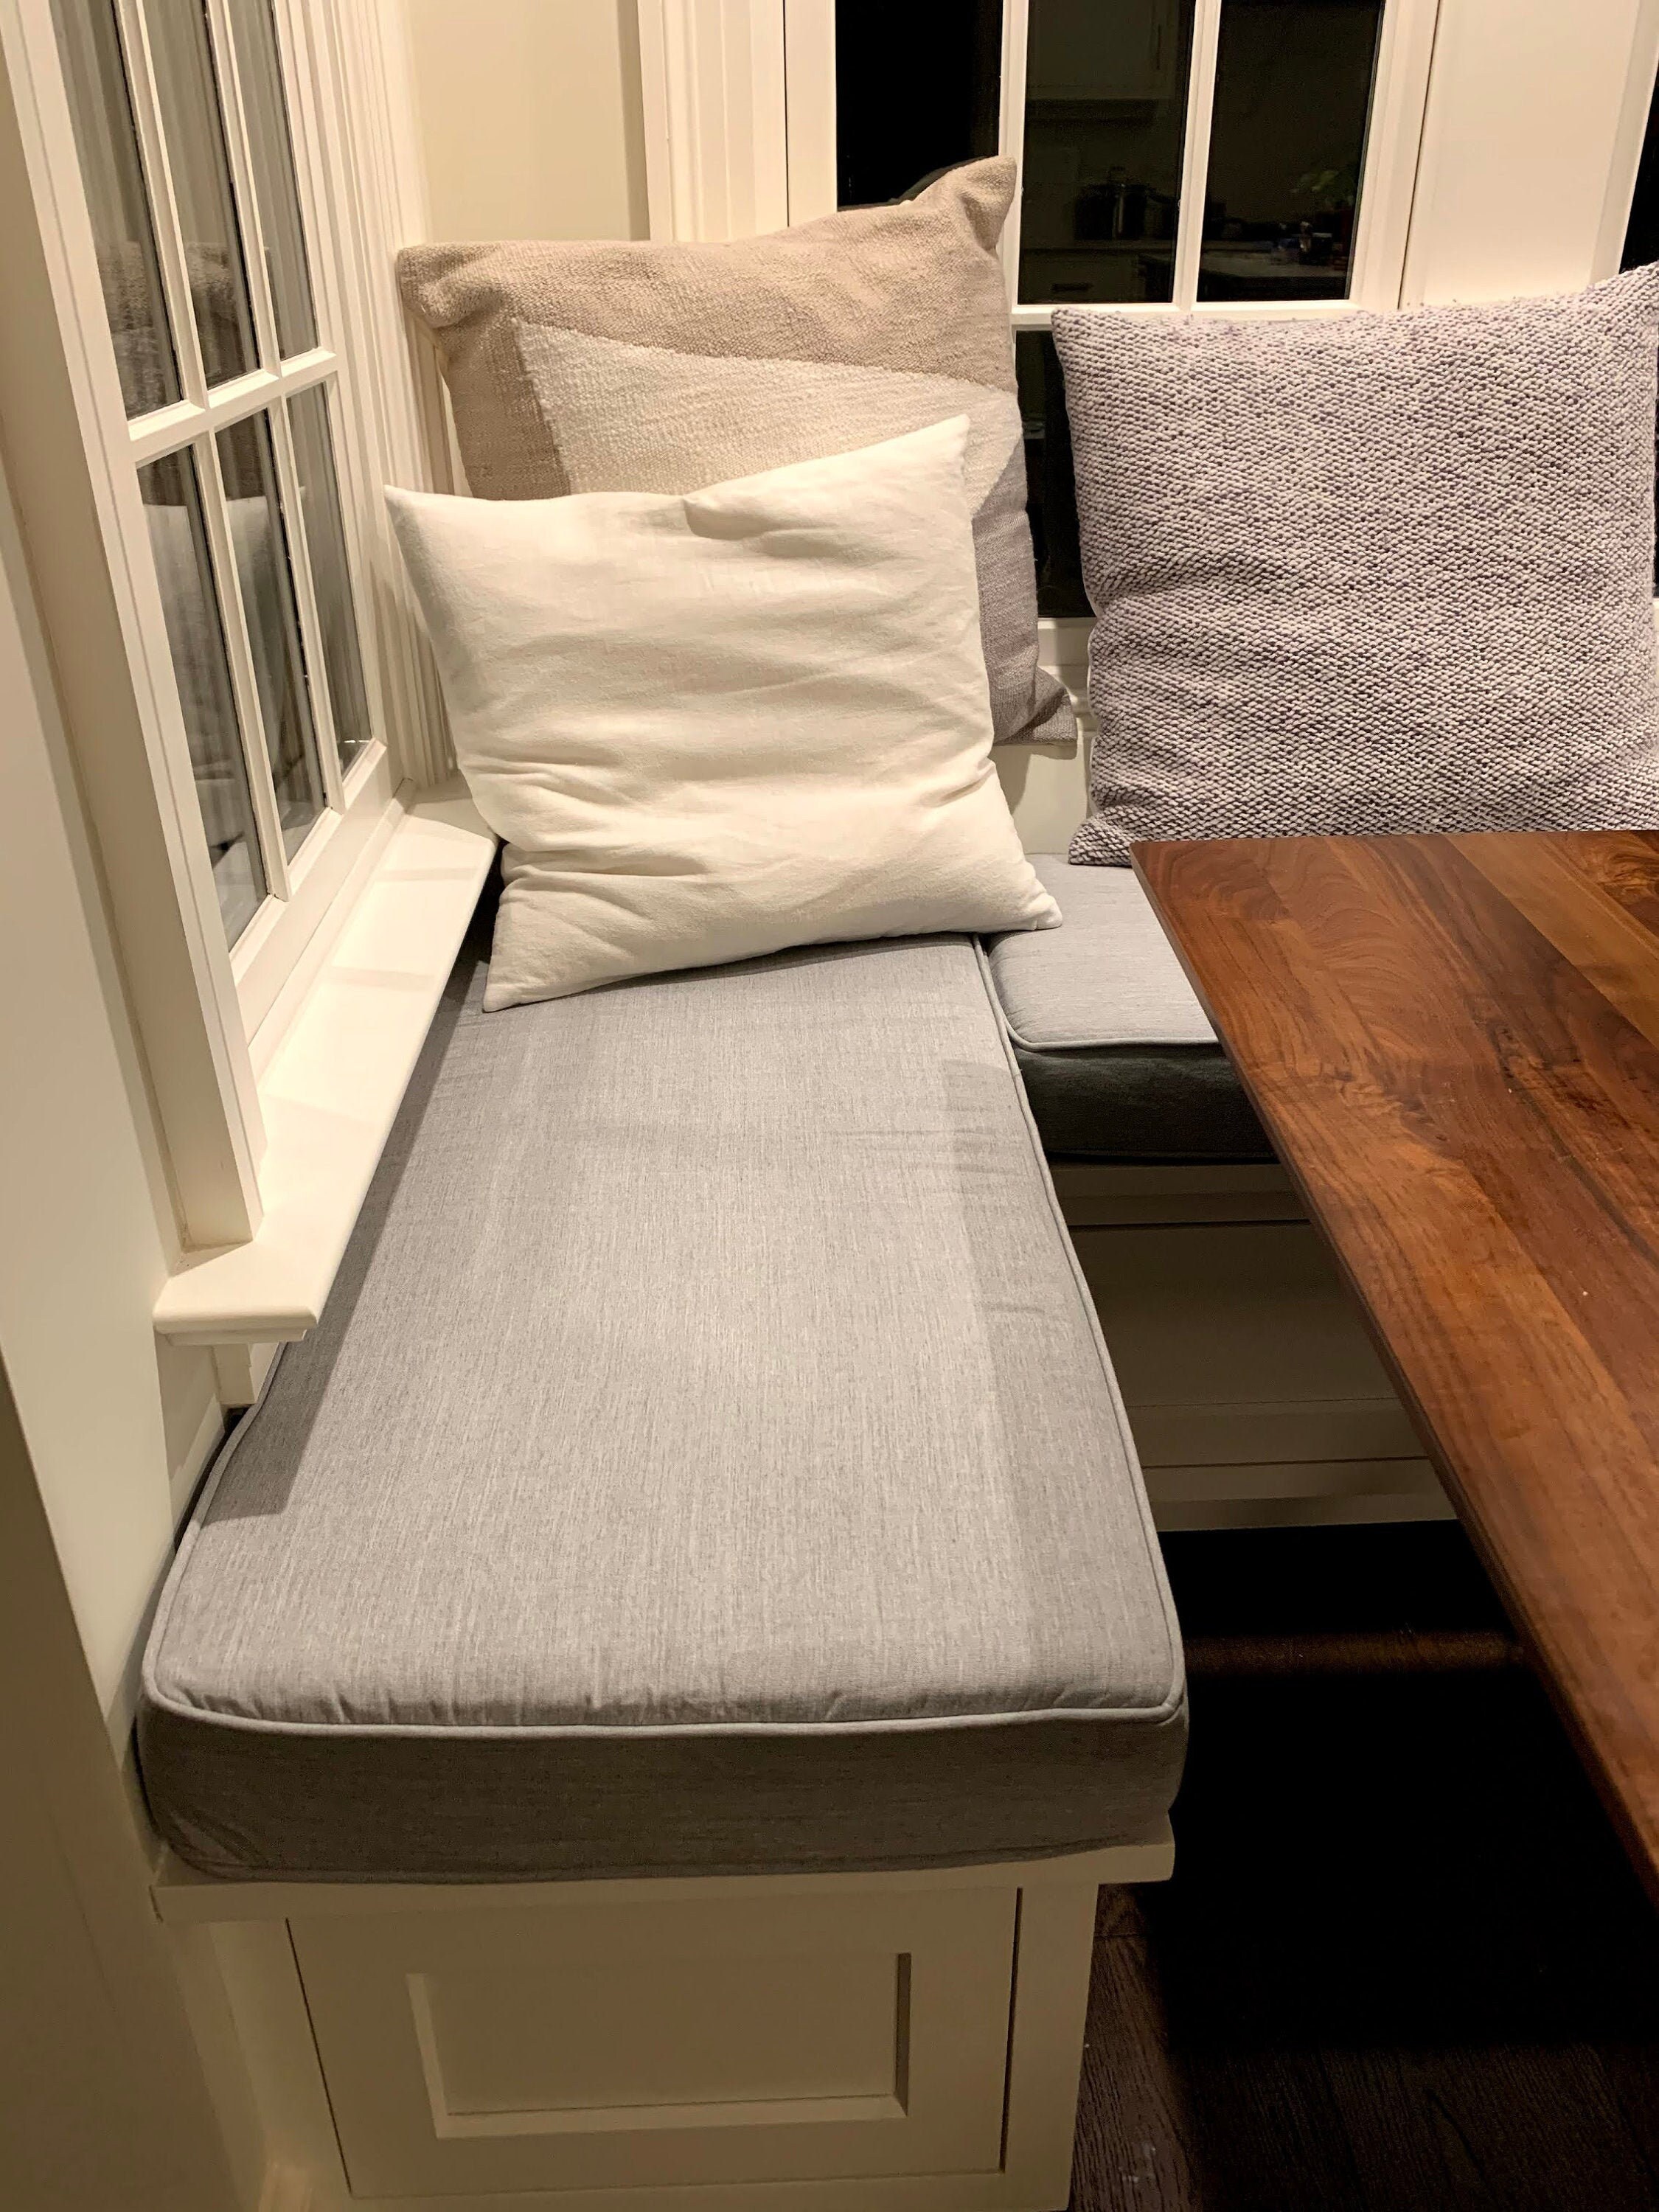 Kitchen bench cushions. Aprovecha tu espacio » Your Cushion Blog